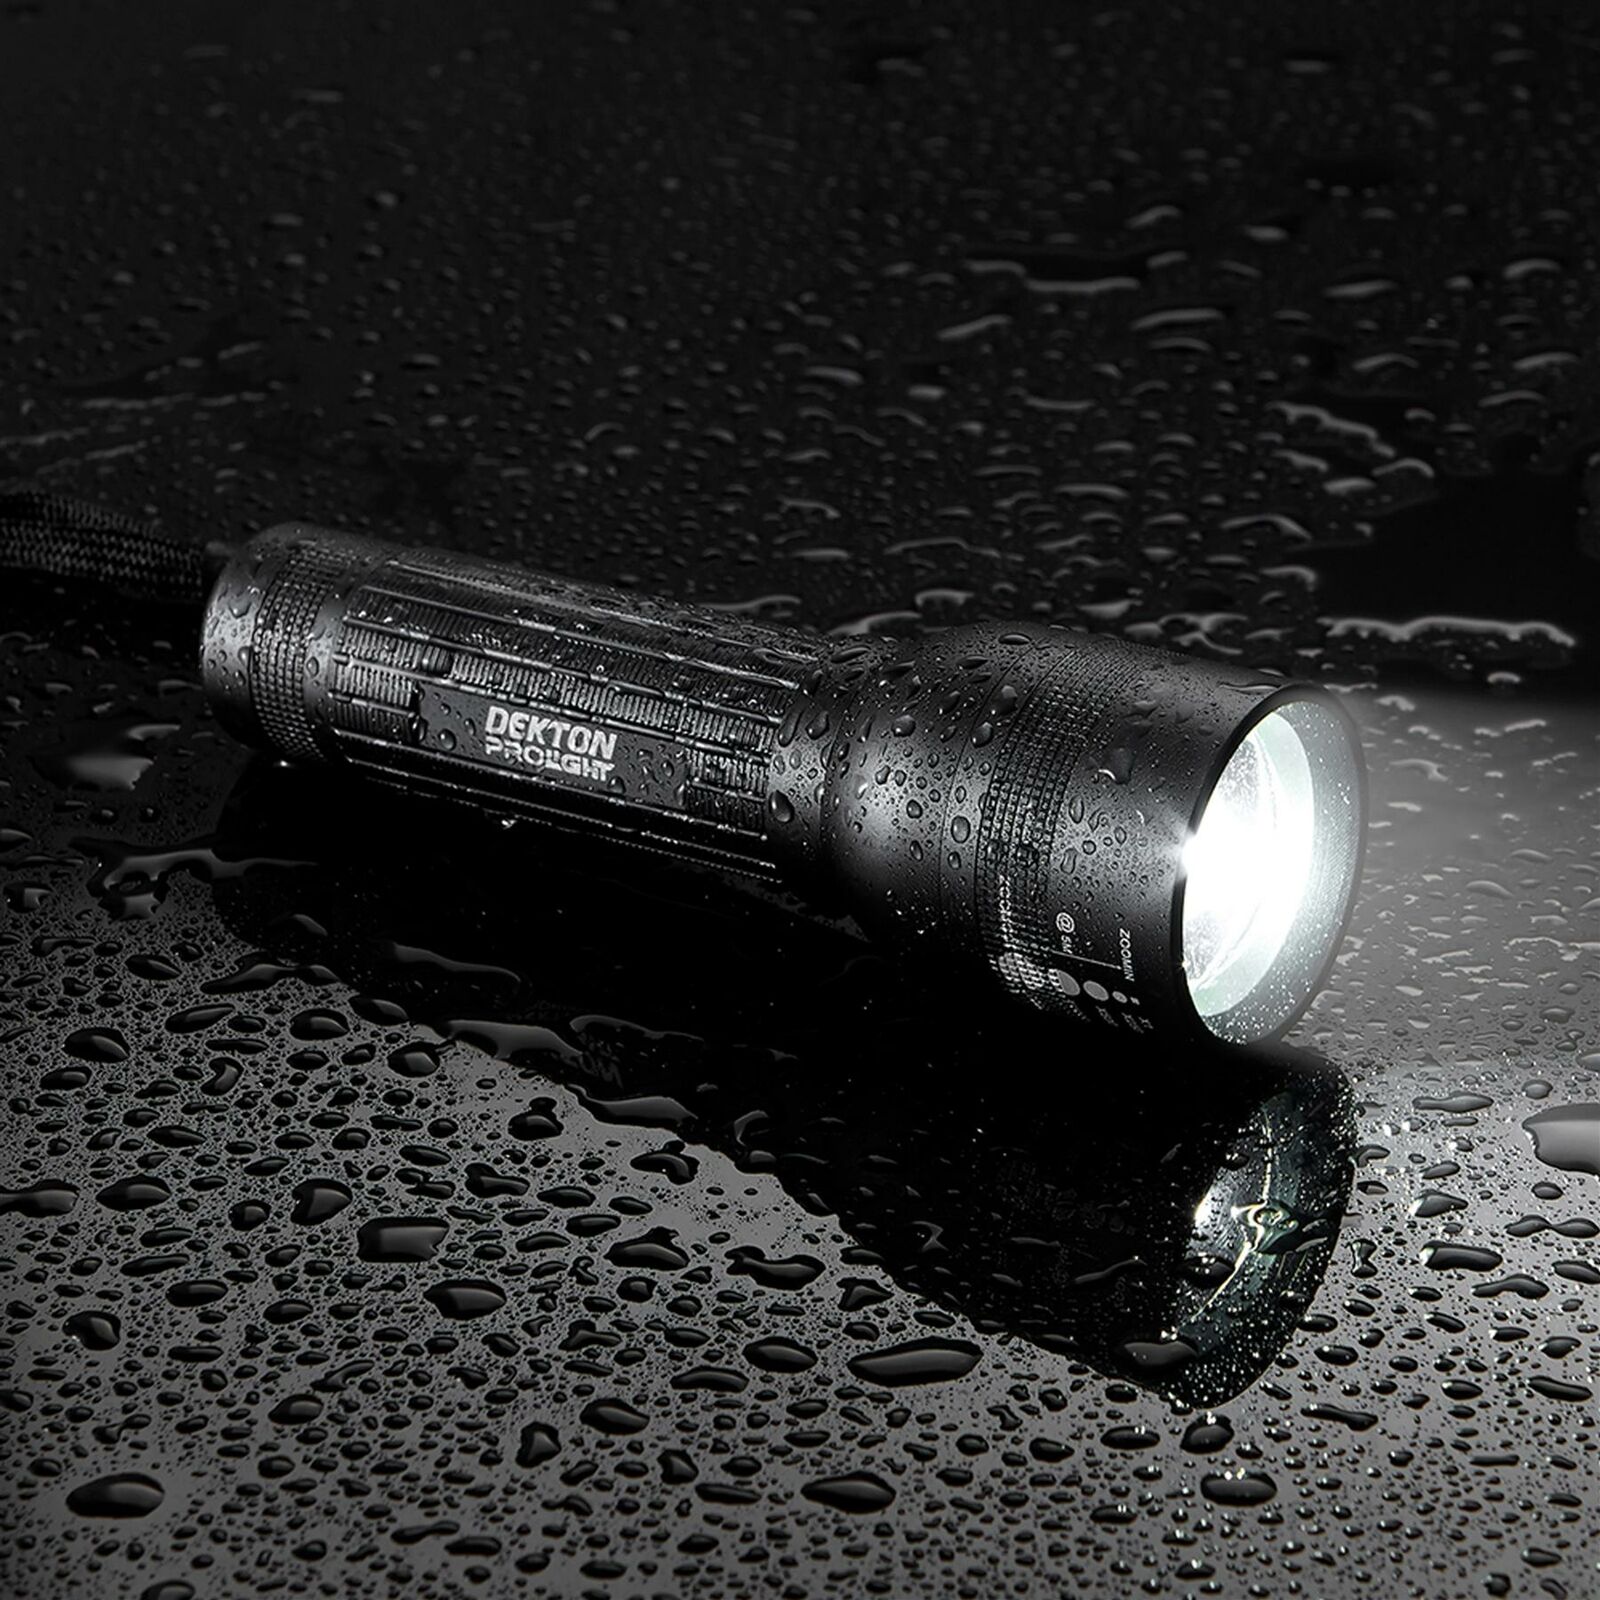 Dekton Professional COB LED Torch 1000 Lumens 500m Flashlight USB Rechargeable